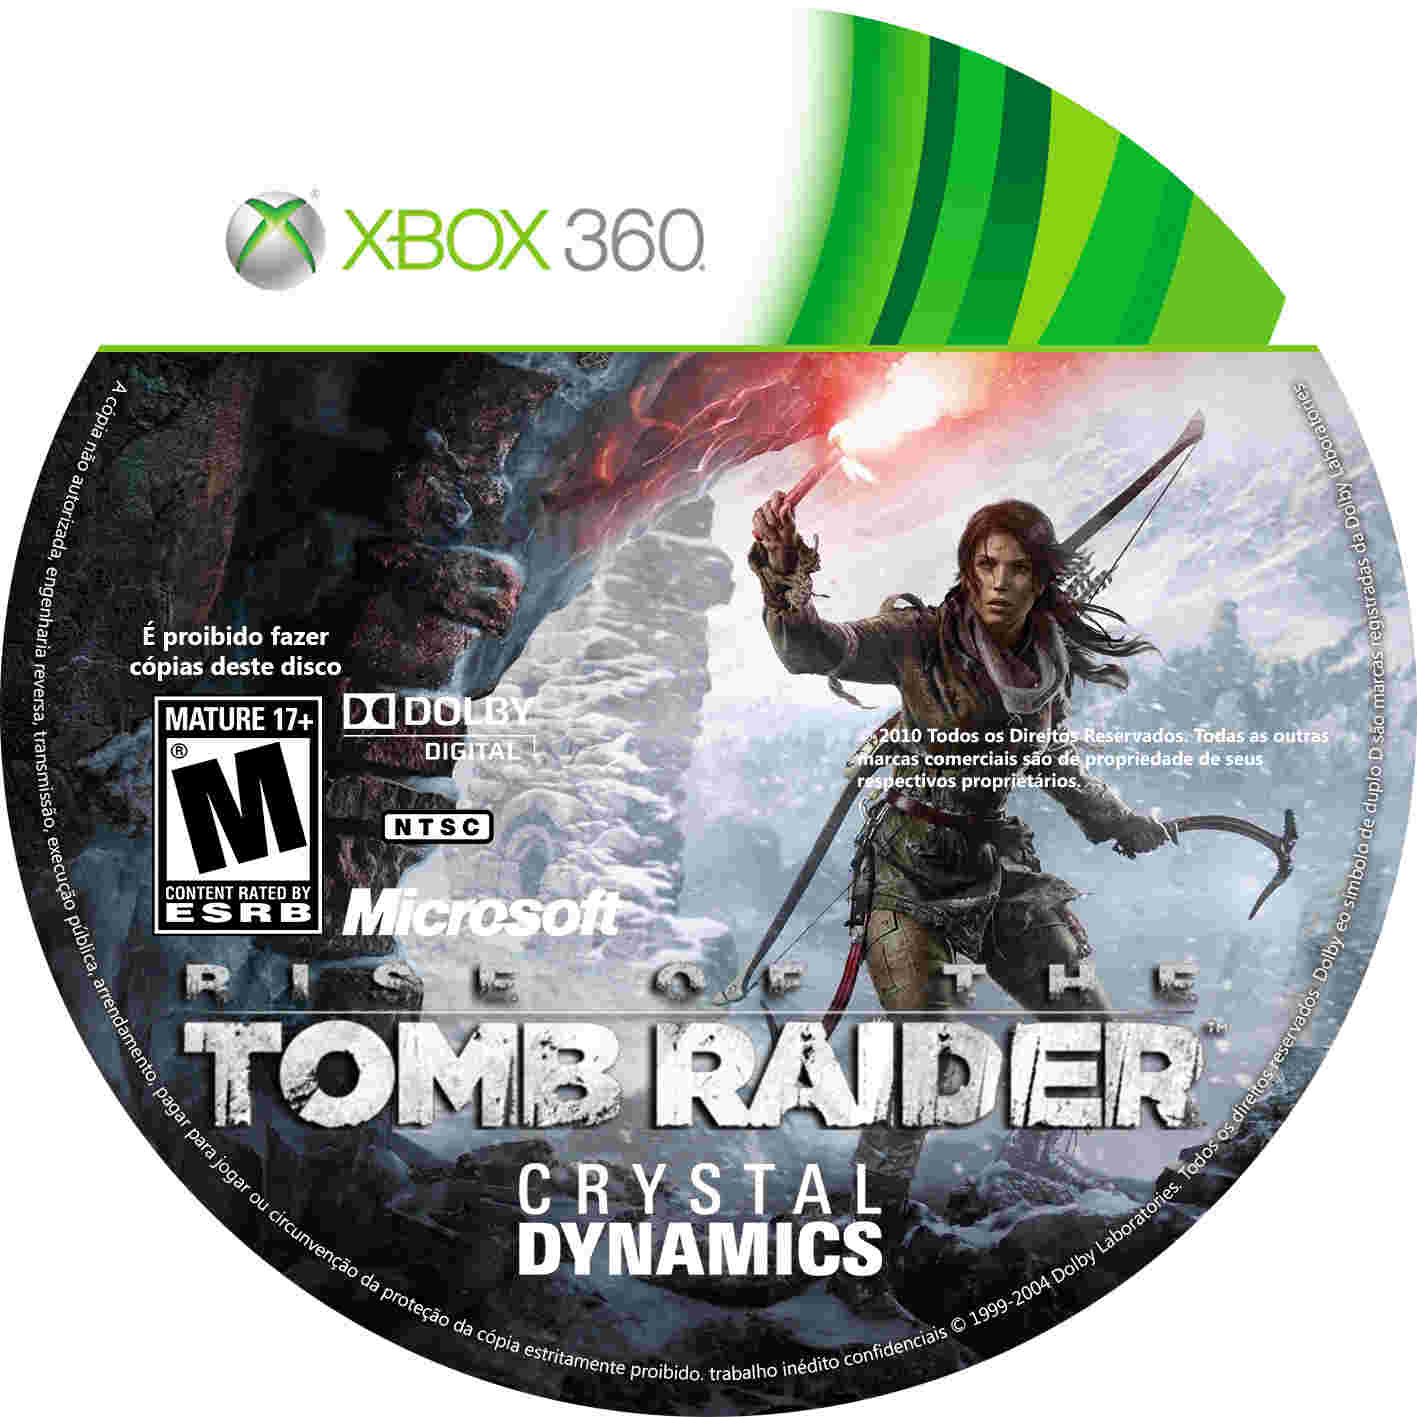 Формат игр xbox 360. Диск Tomb Raider для Xbox 360. Rise of the Tomb Raider Xbox 360 диск. Обложка для диска Xbox 360 Tomb Raider. Risen Xbox 360 диск.